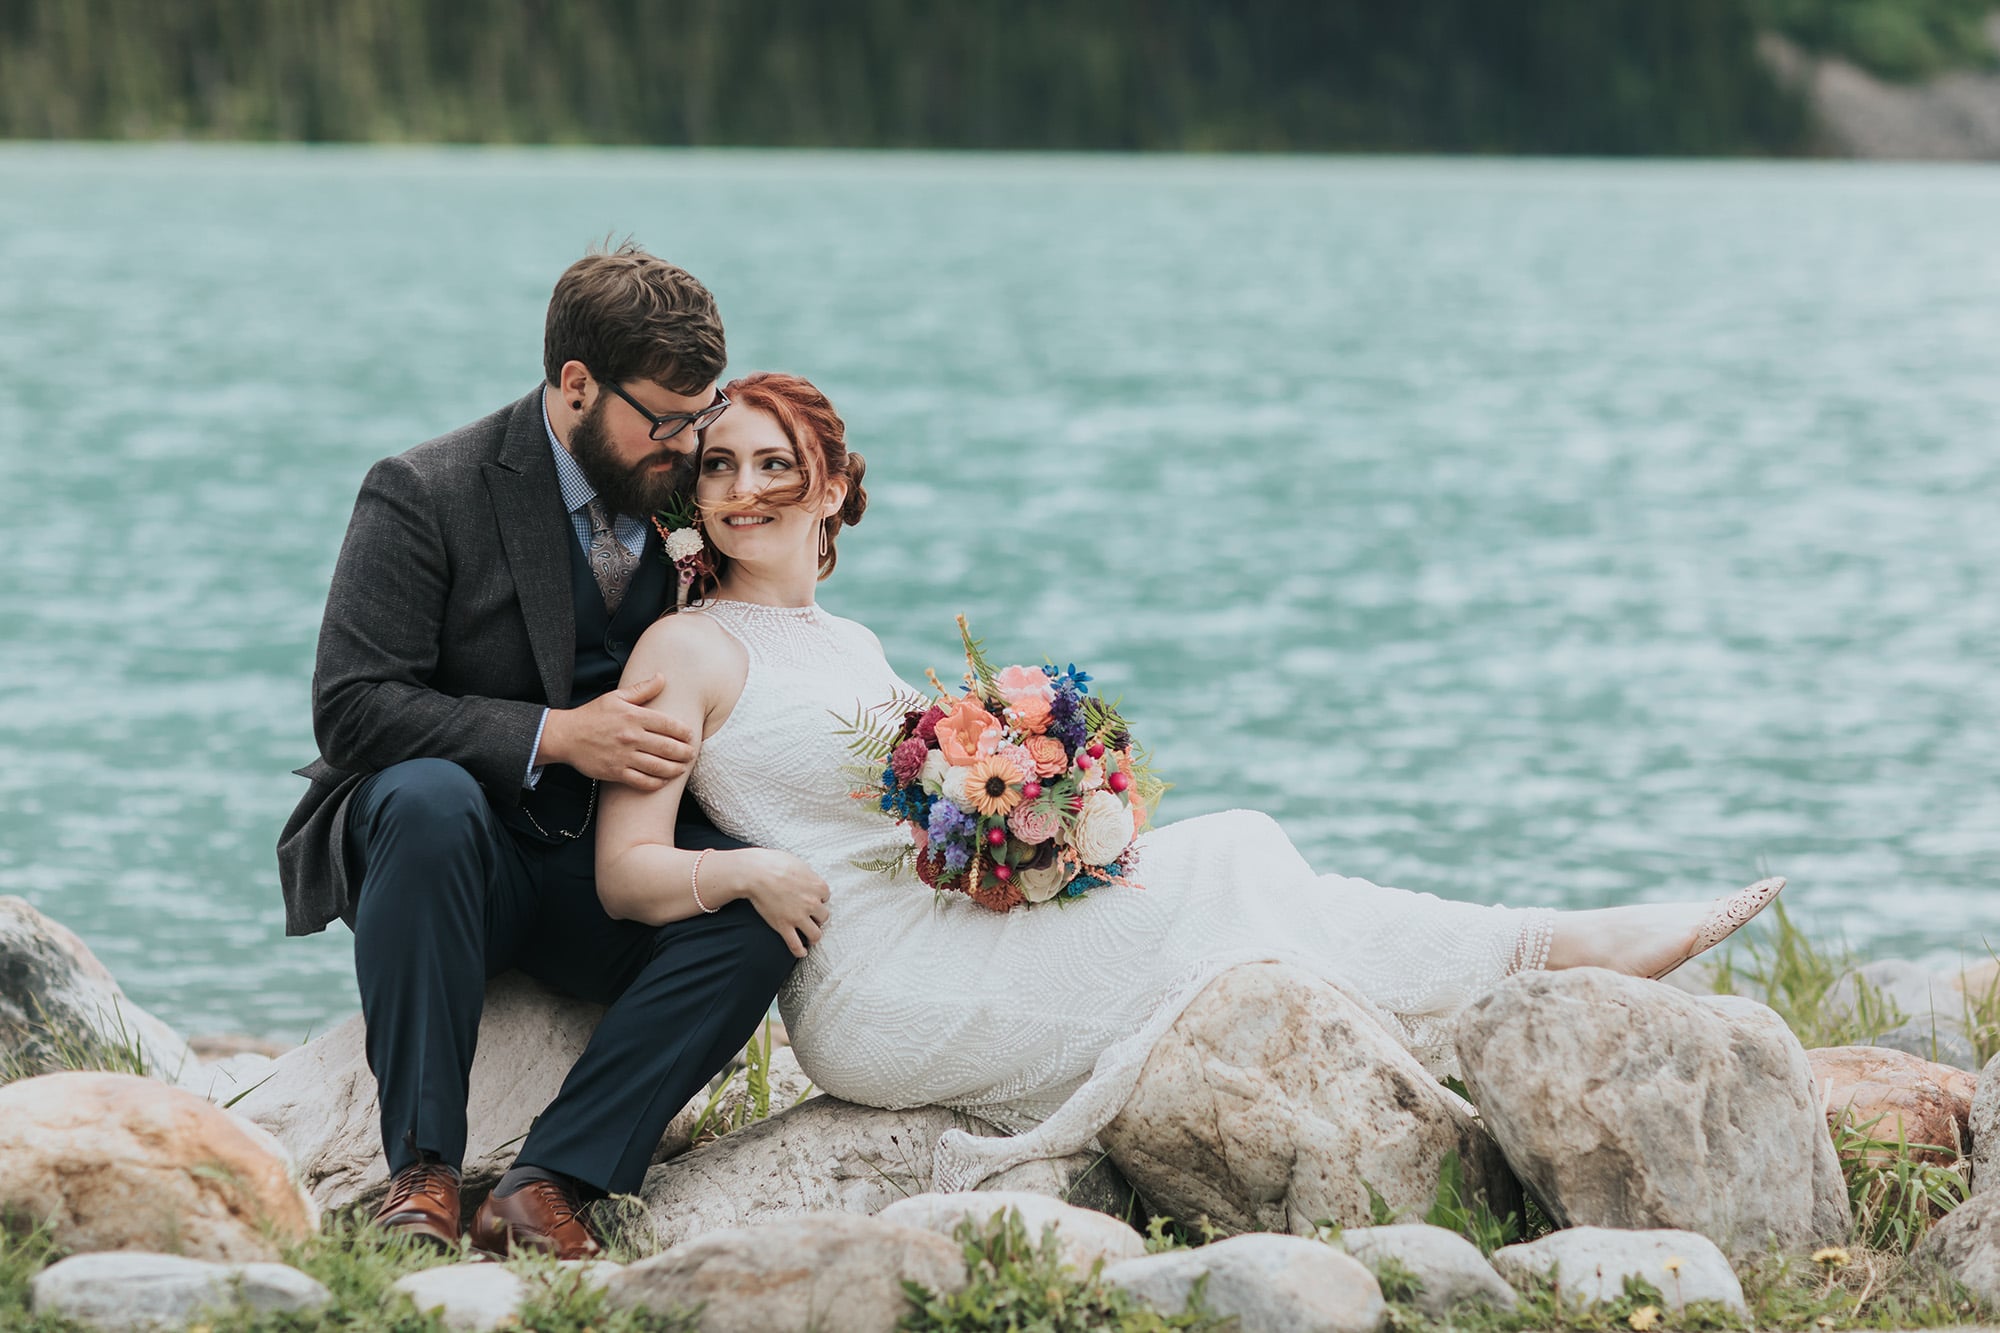 Windy Lake Louise Wedding photographers